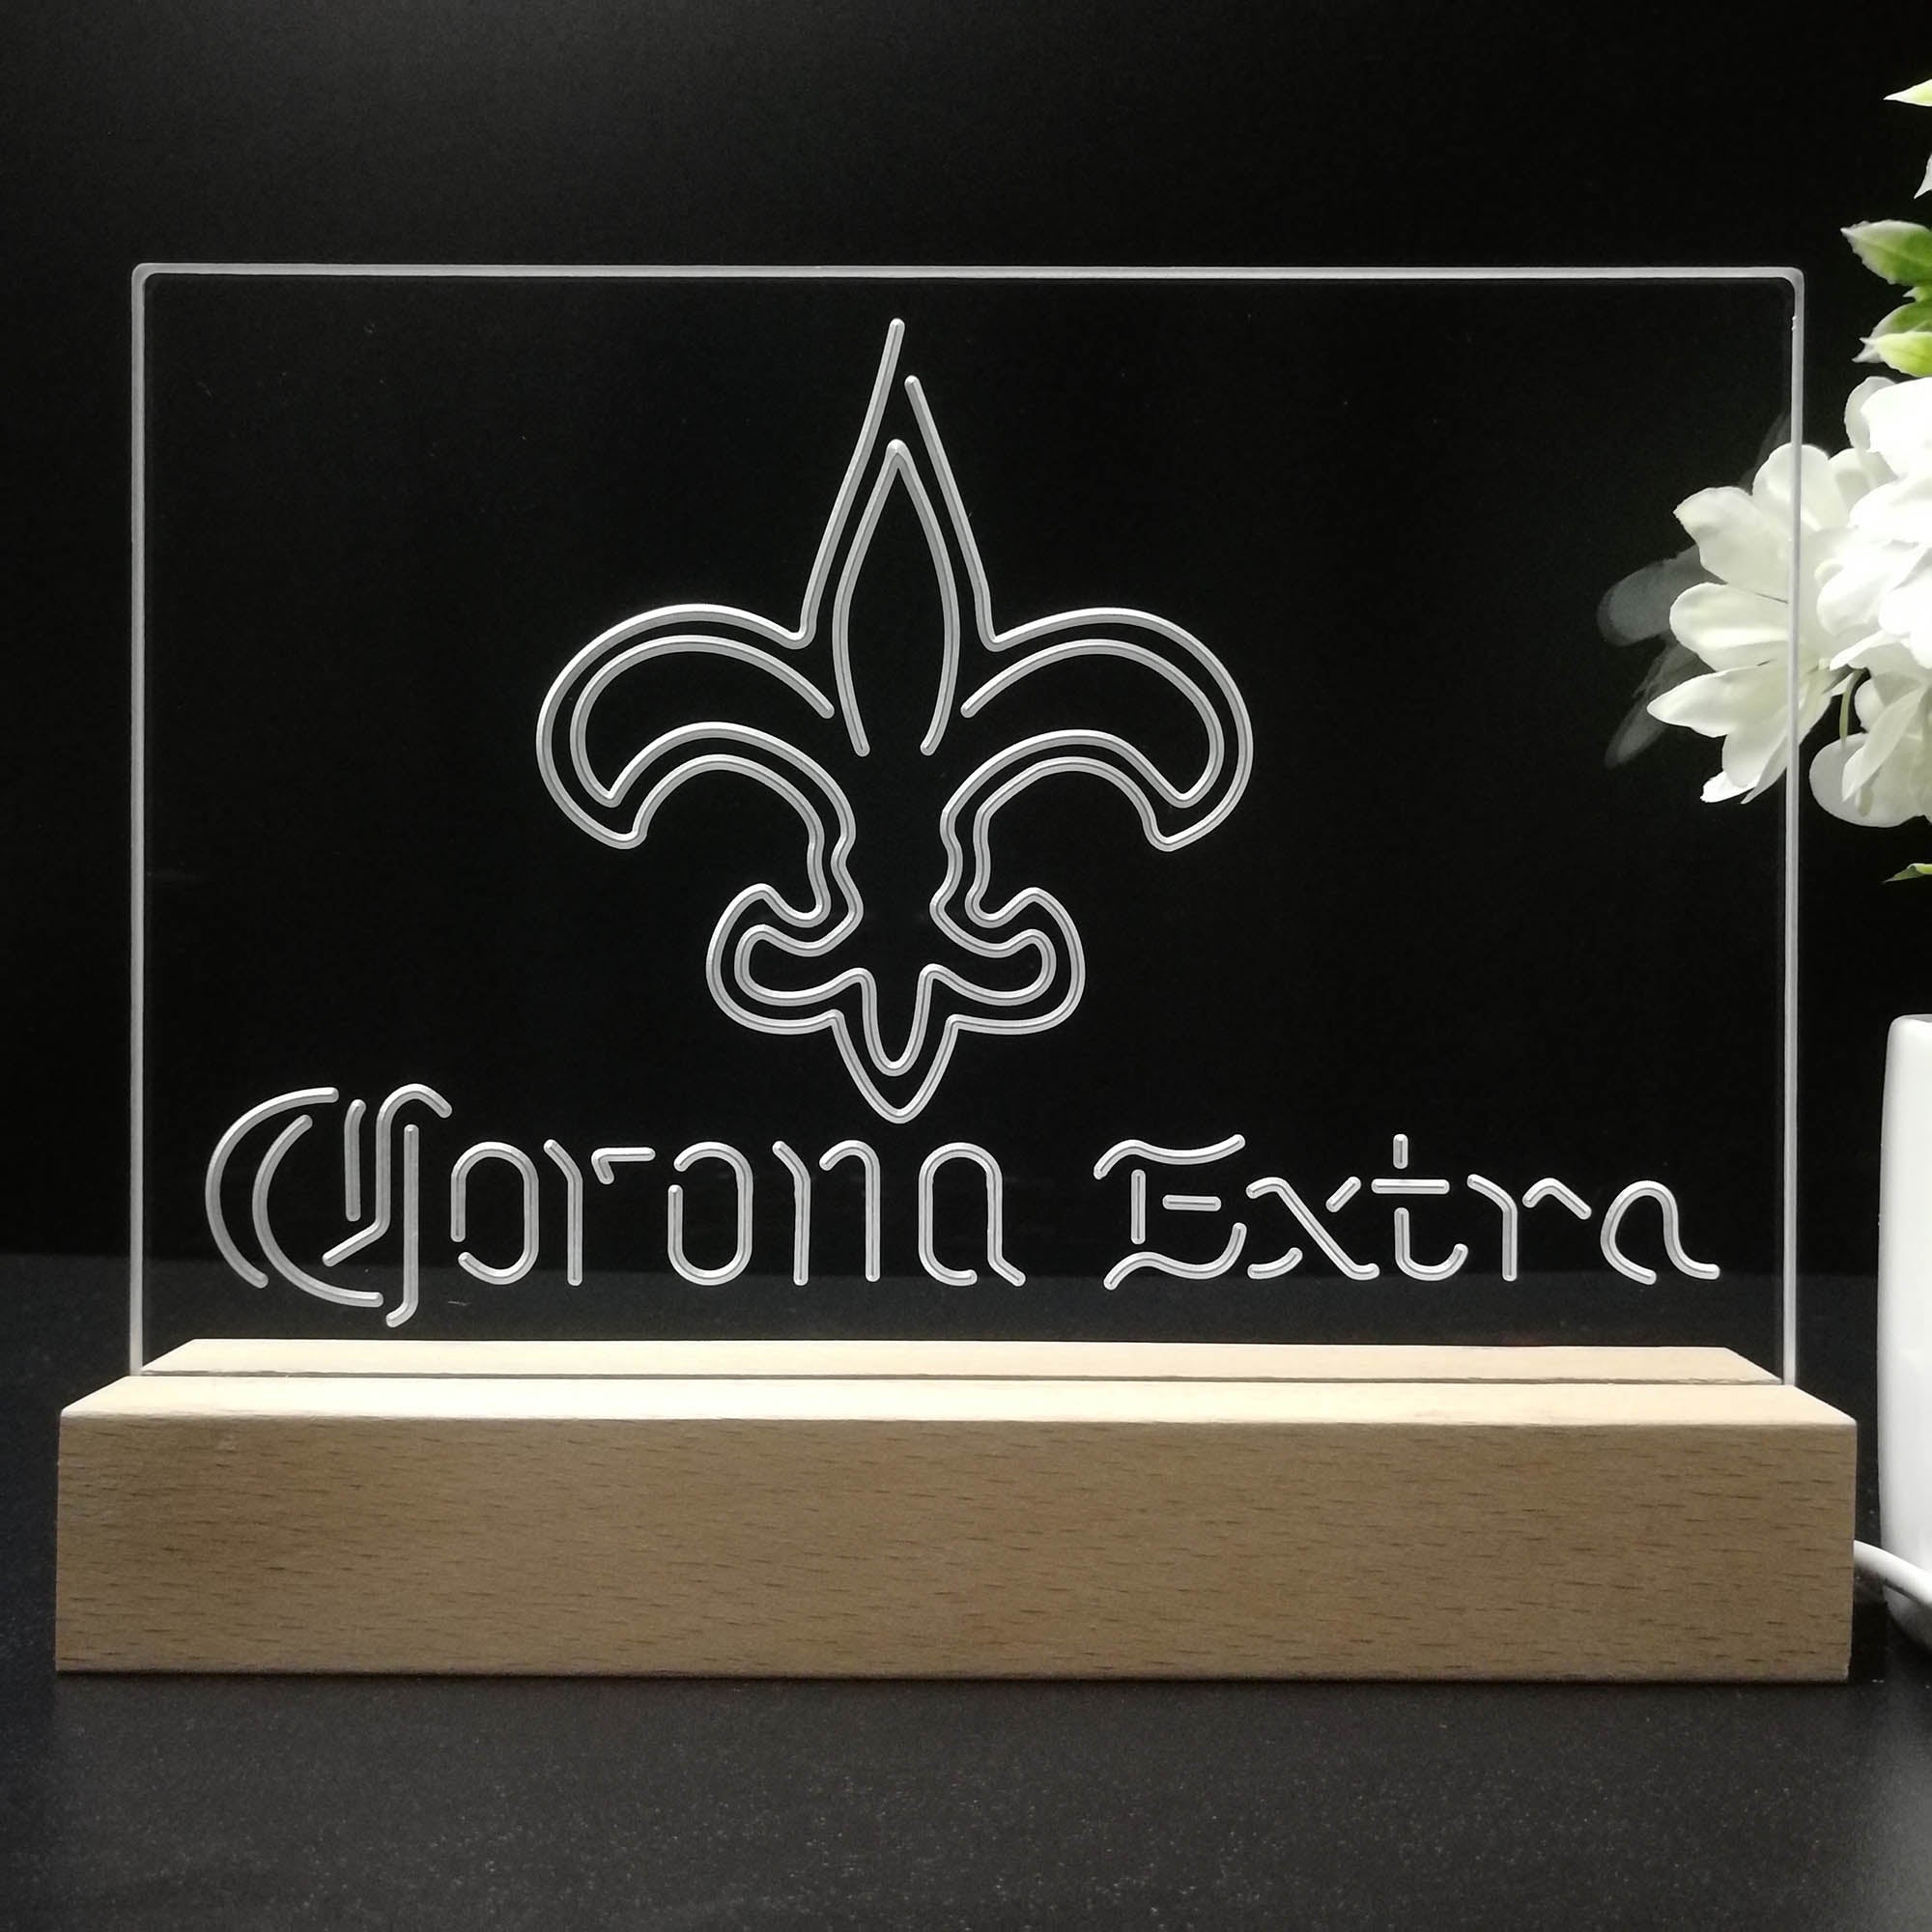 Corona Extra Bar New Orleans Saints Est. 1967 Night Light Pub Bar Lamp